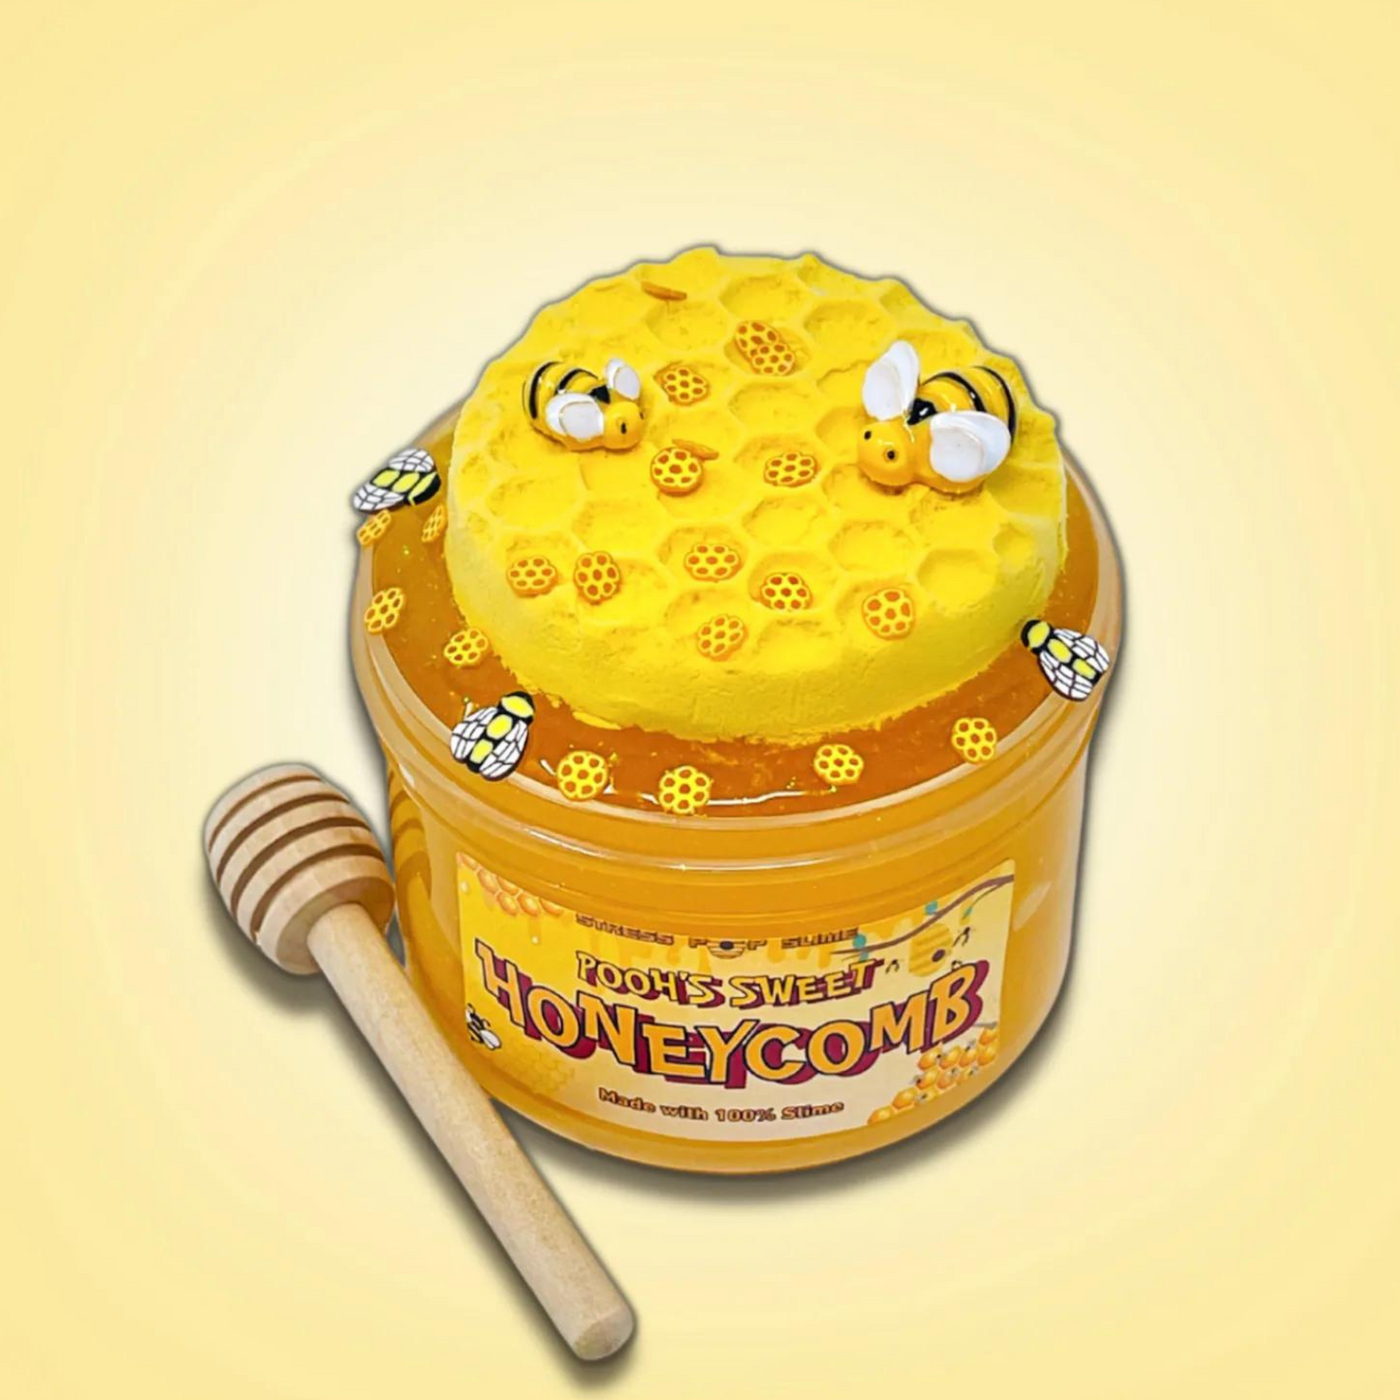 "Pooh's Sweet Honeycomb" Clay Slime Kit